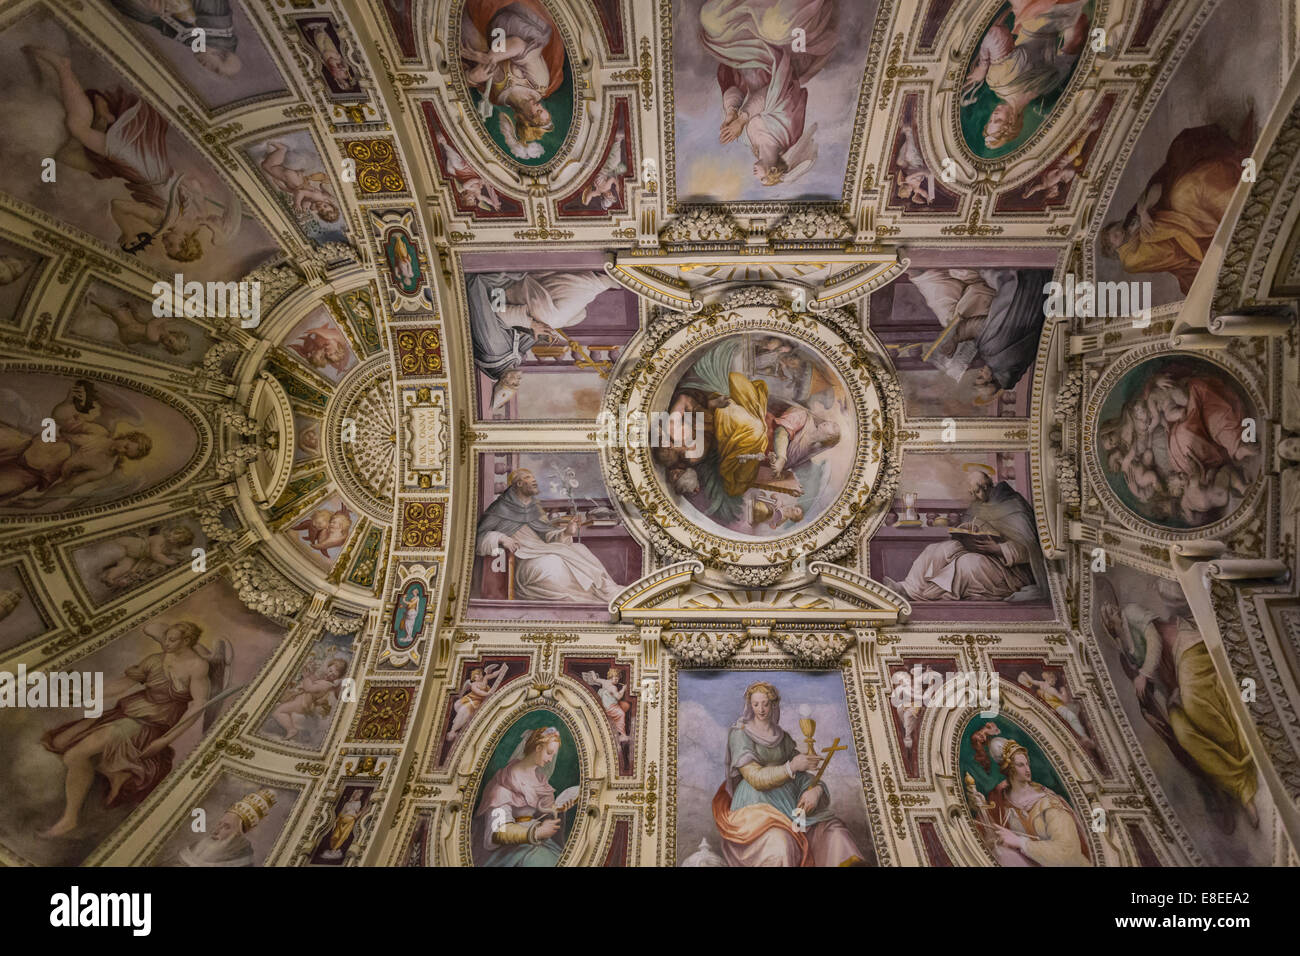 Chapel of St Peter the martyr (Capella di San Pietro Martire) ceiling fresco, Vatican museums, Vatican City Stock Photo